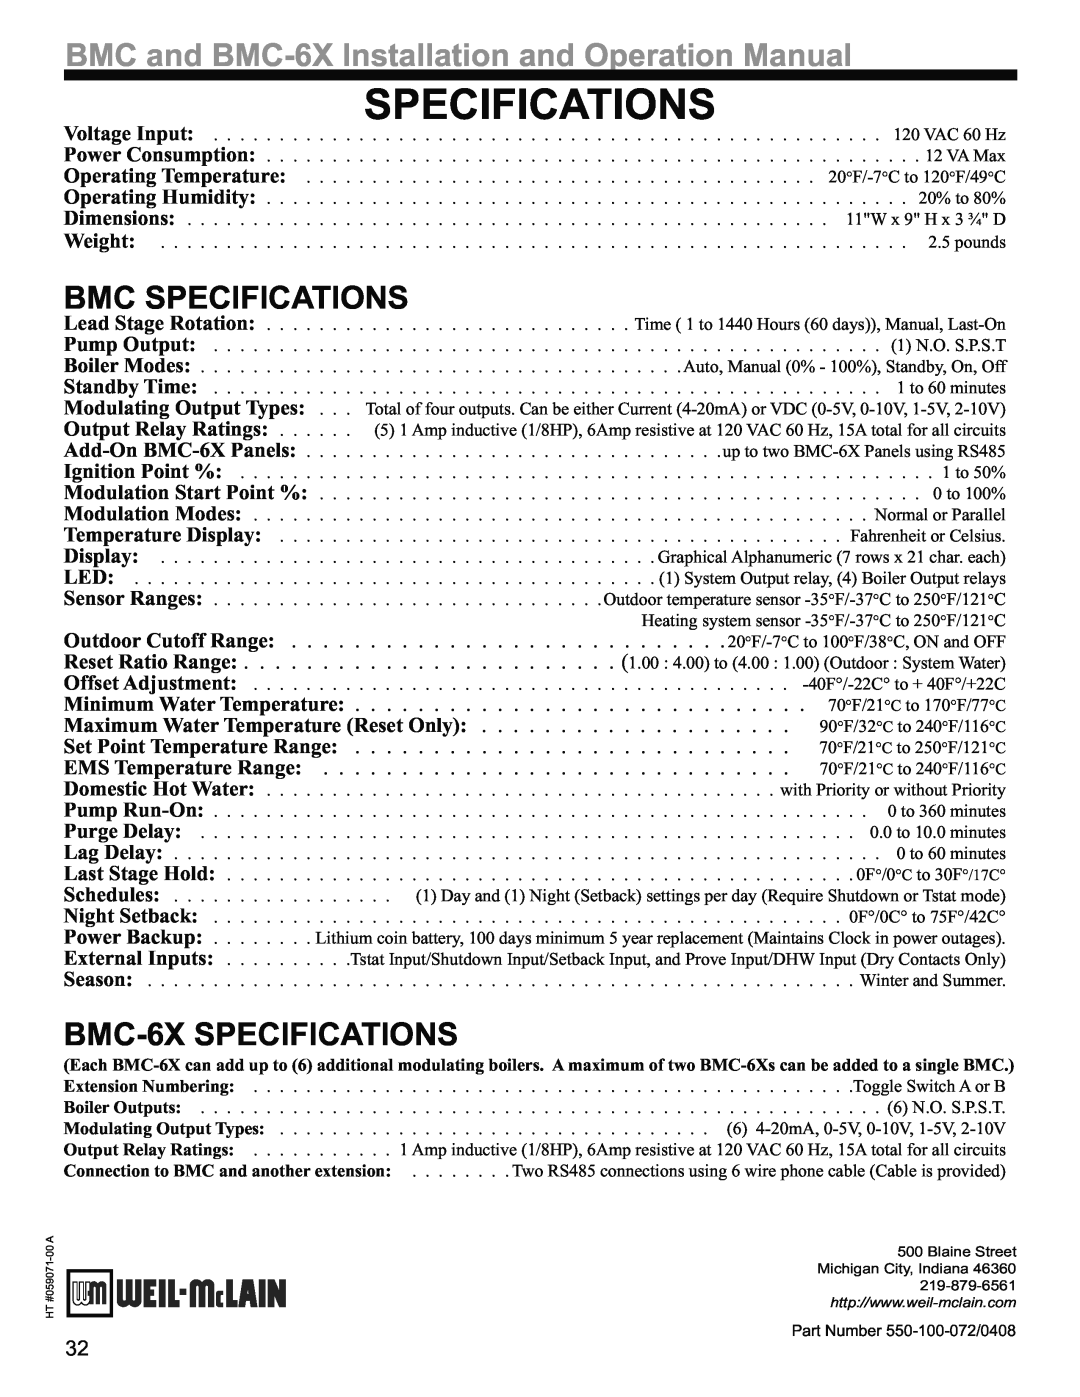 Weil-McLain operation manual Bmc Specifications, BMC-6XSPECIFICATIONS, Outdoor Cutoff Range, Reset Ratio Range, 1.00 